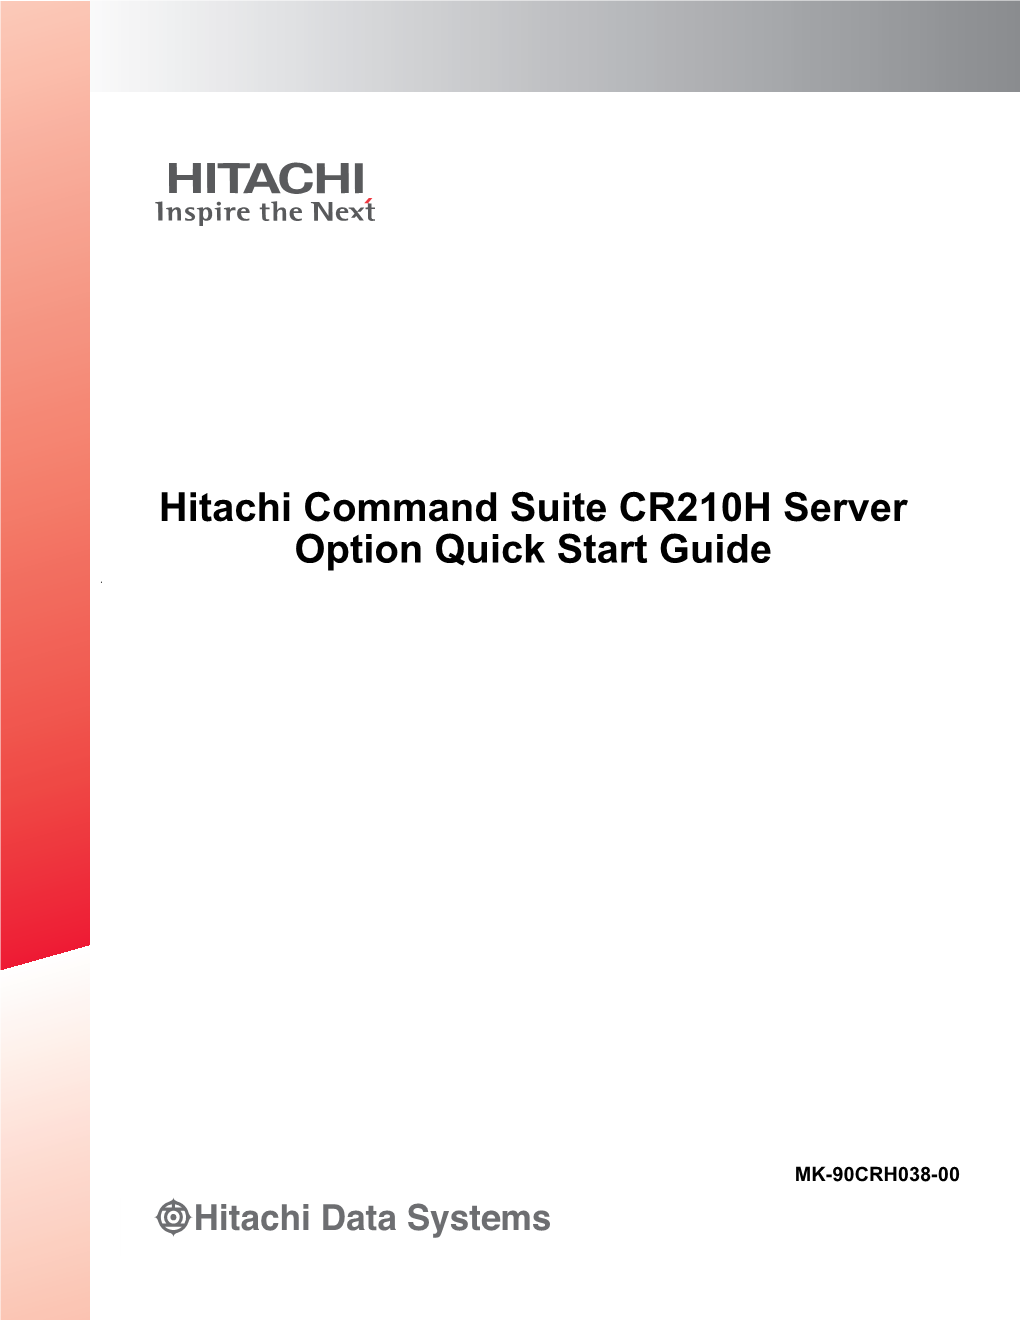 Hitachi Command Suite CR210H Server Option Quick Start Guide